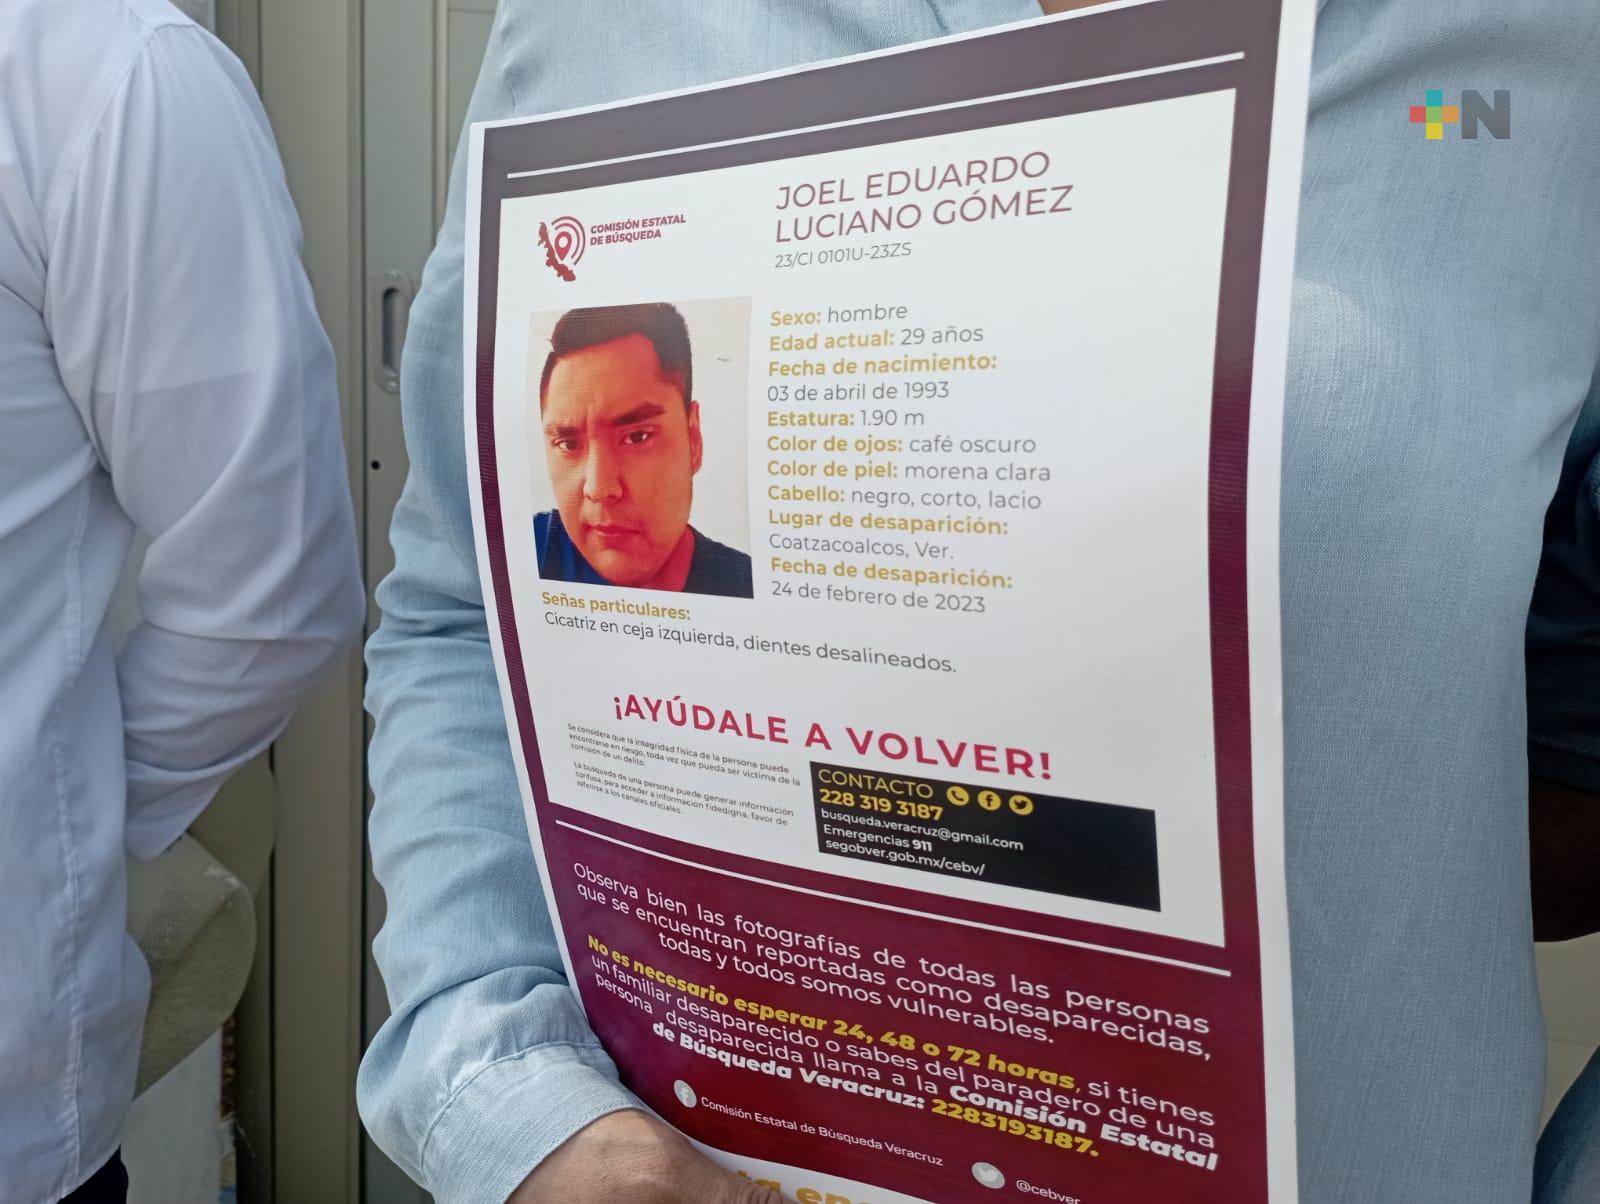 Realizan búsqueda inmediata en vida de Joel Eduardo Luciano en Coatzacoalcos